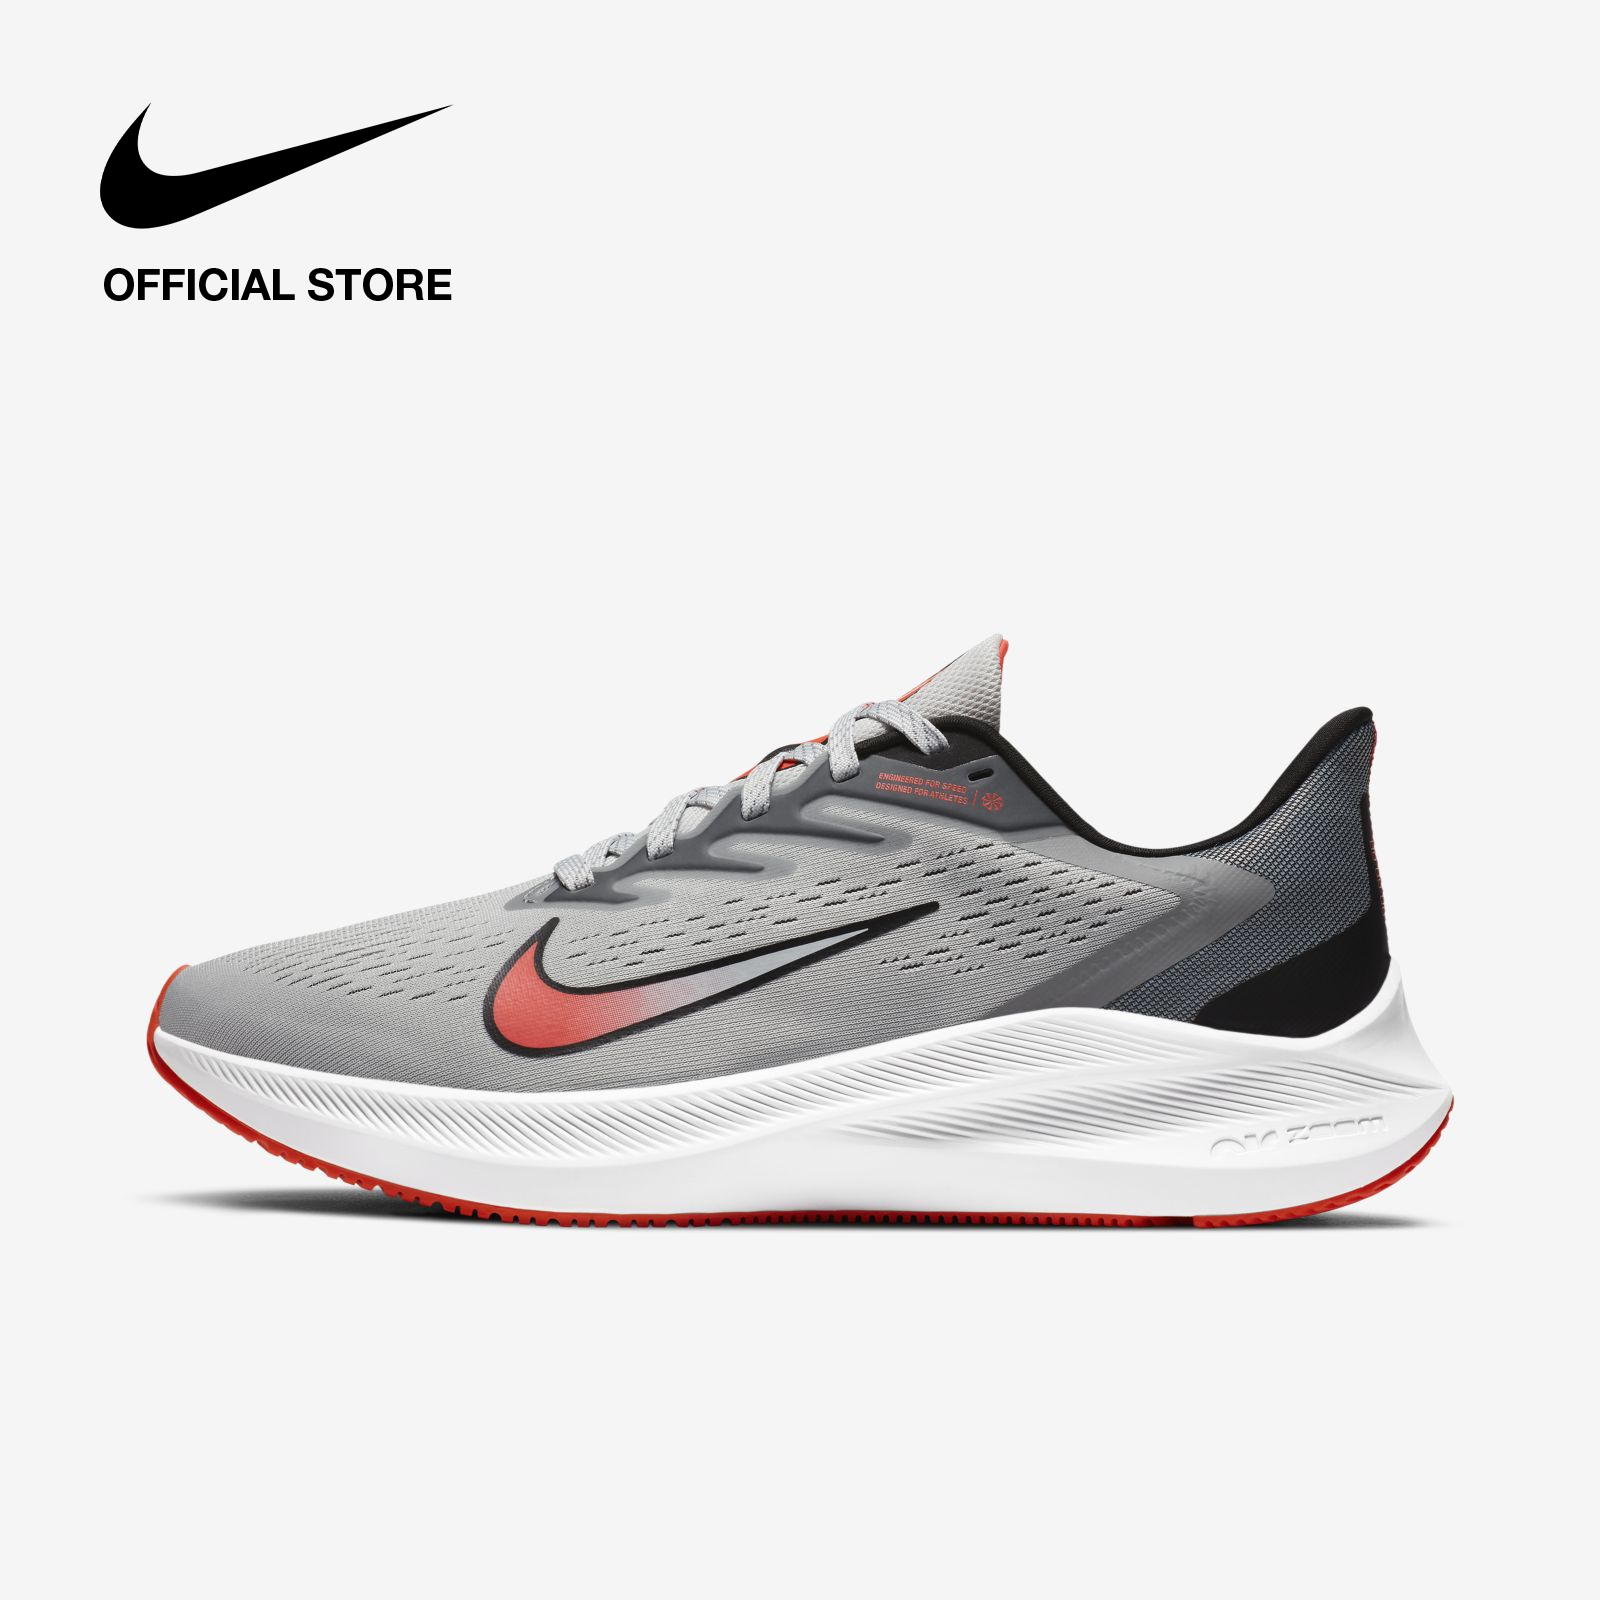 Nike Men's Air Zoom Winflo 7 Running Shoes - Grey ไนกี้ รองเท้าวิ่งผู้ชาย แอร์ ซูม วินฟโล 7 - สีเทา